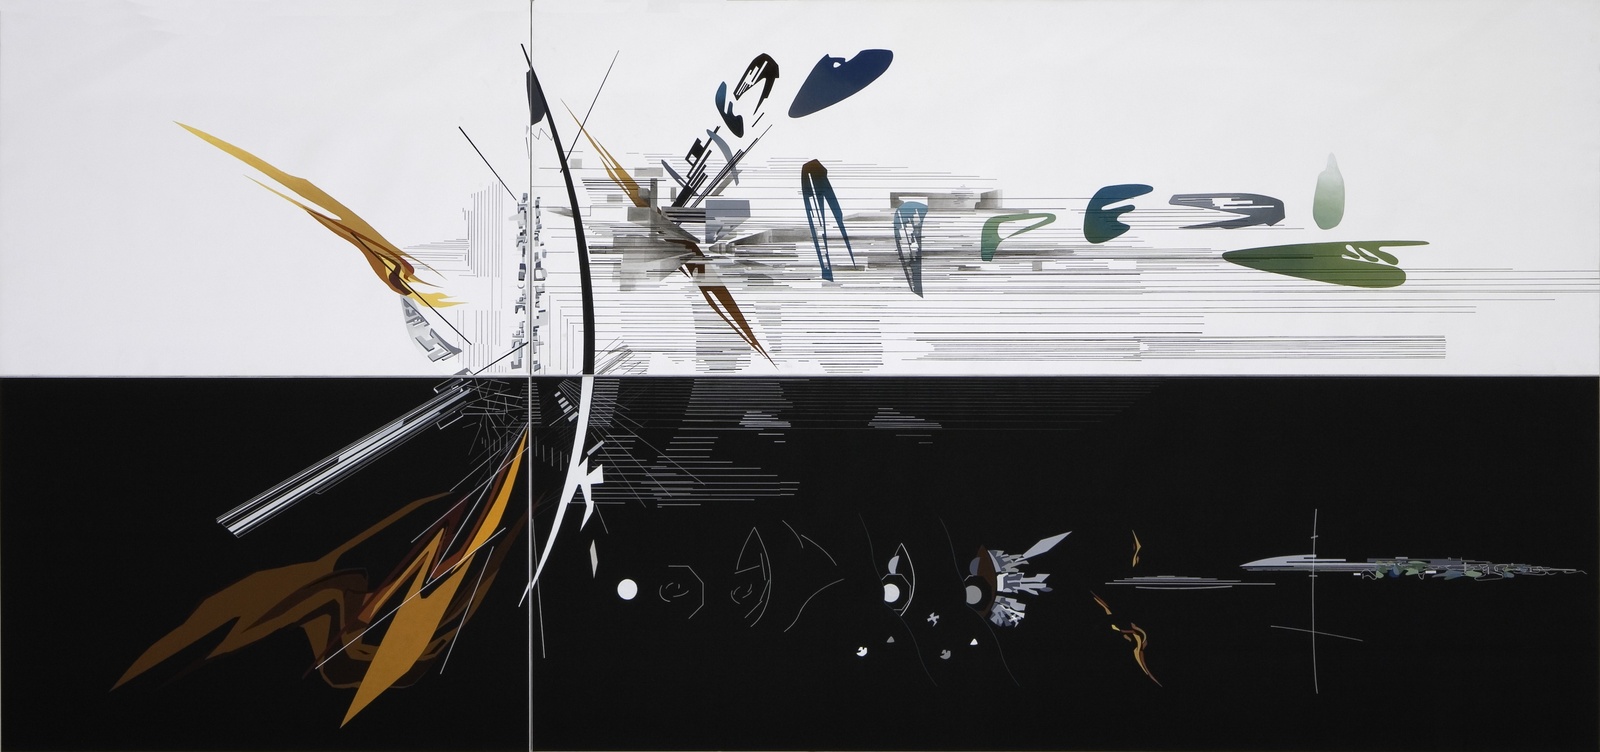 Zara Hadid: Paintings and drawings at the Serpentine Galleries